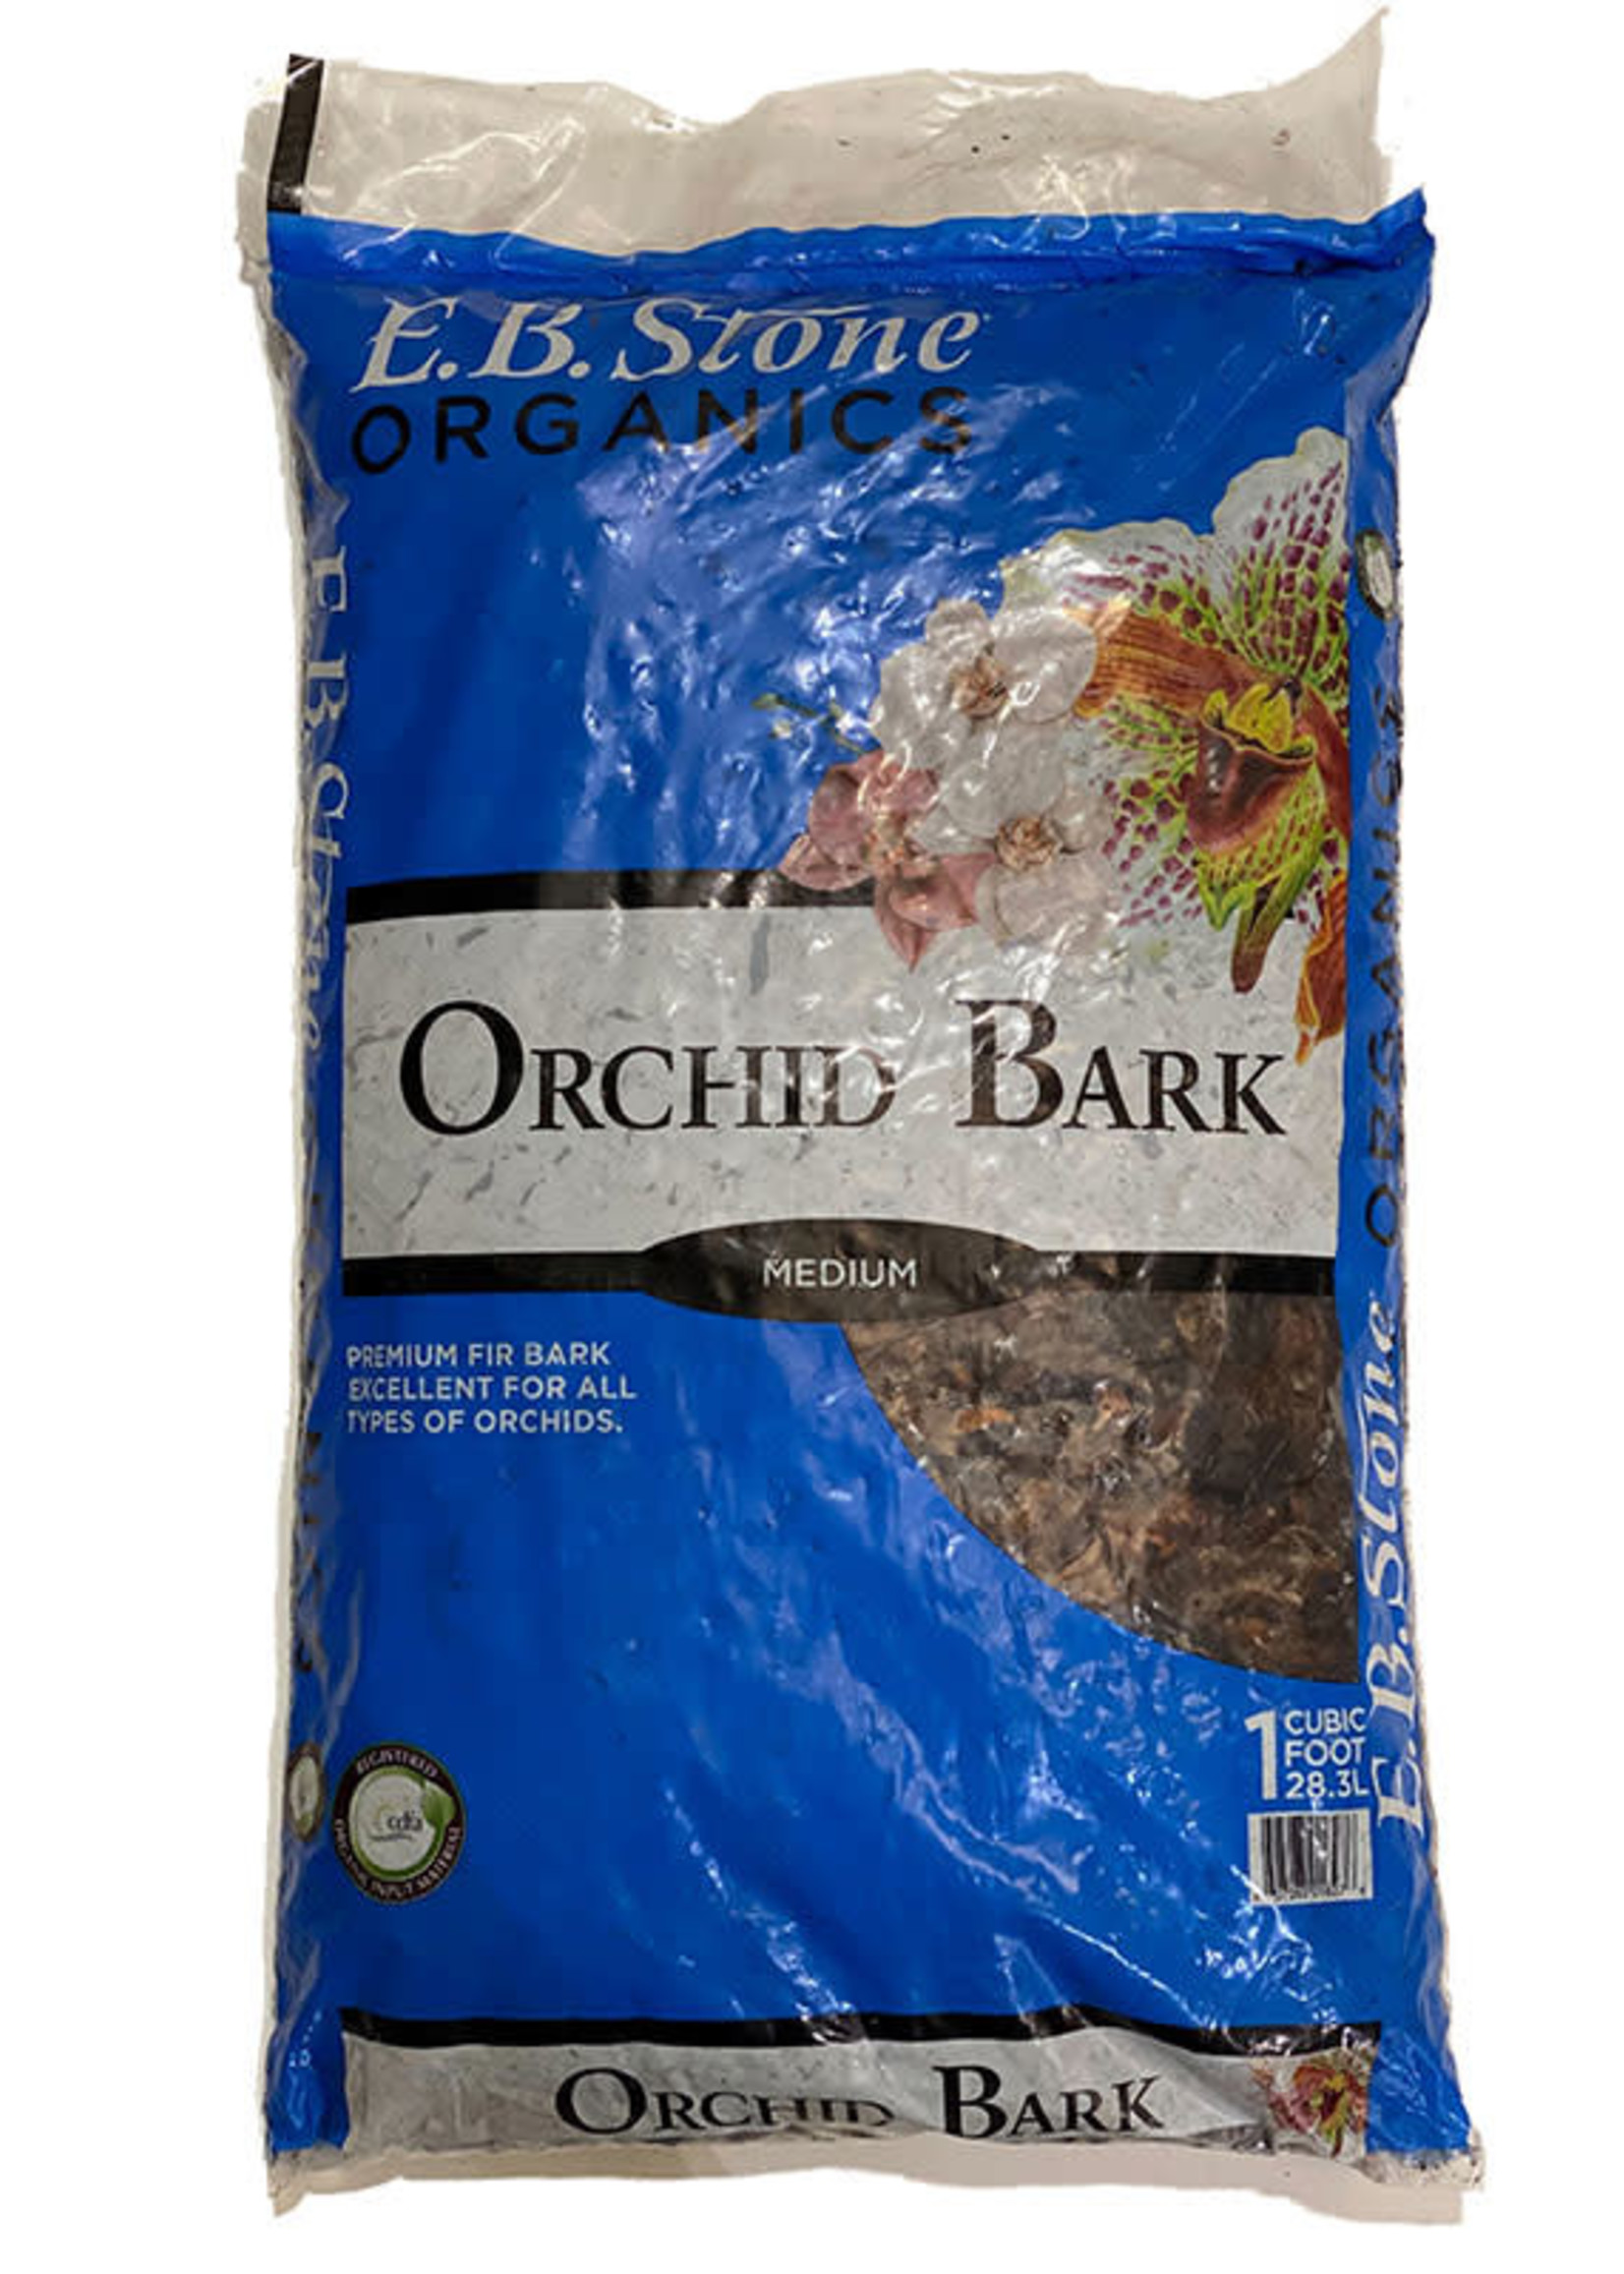 E.B. Stone Organics E.B. Stone Orchid Bark